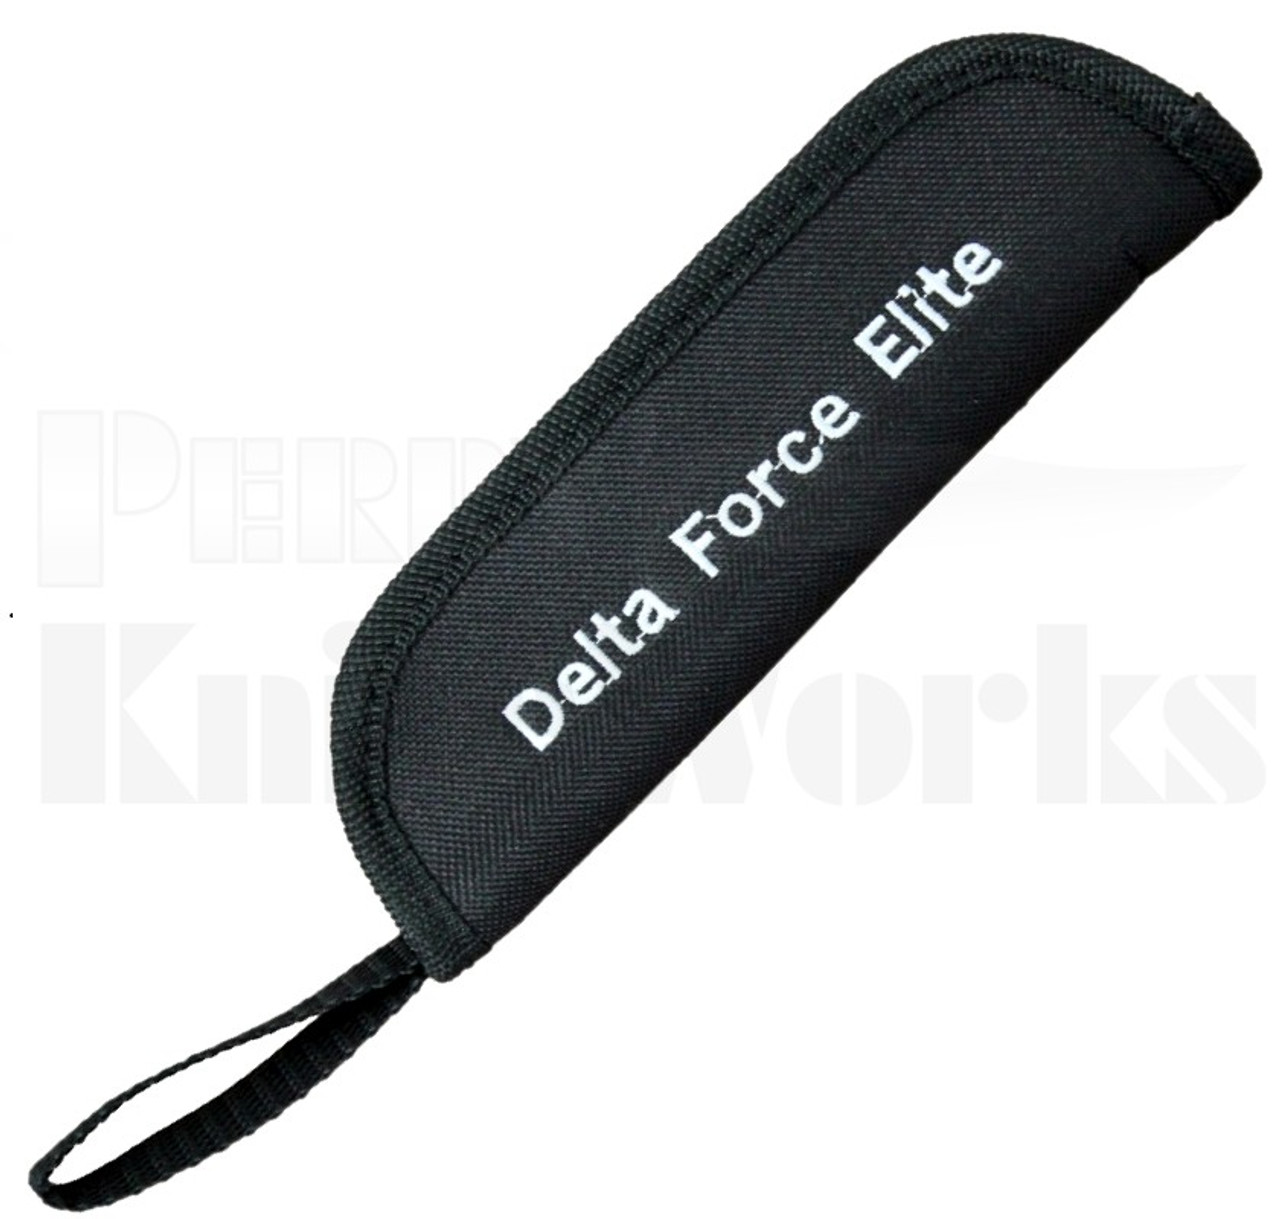 Delta Force Elite Model-C Tanto Automatic Knife Black l 3.2" Blade l Pouch